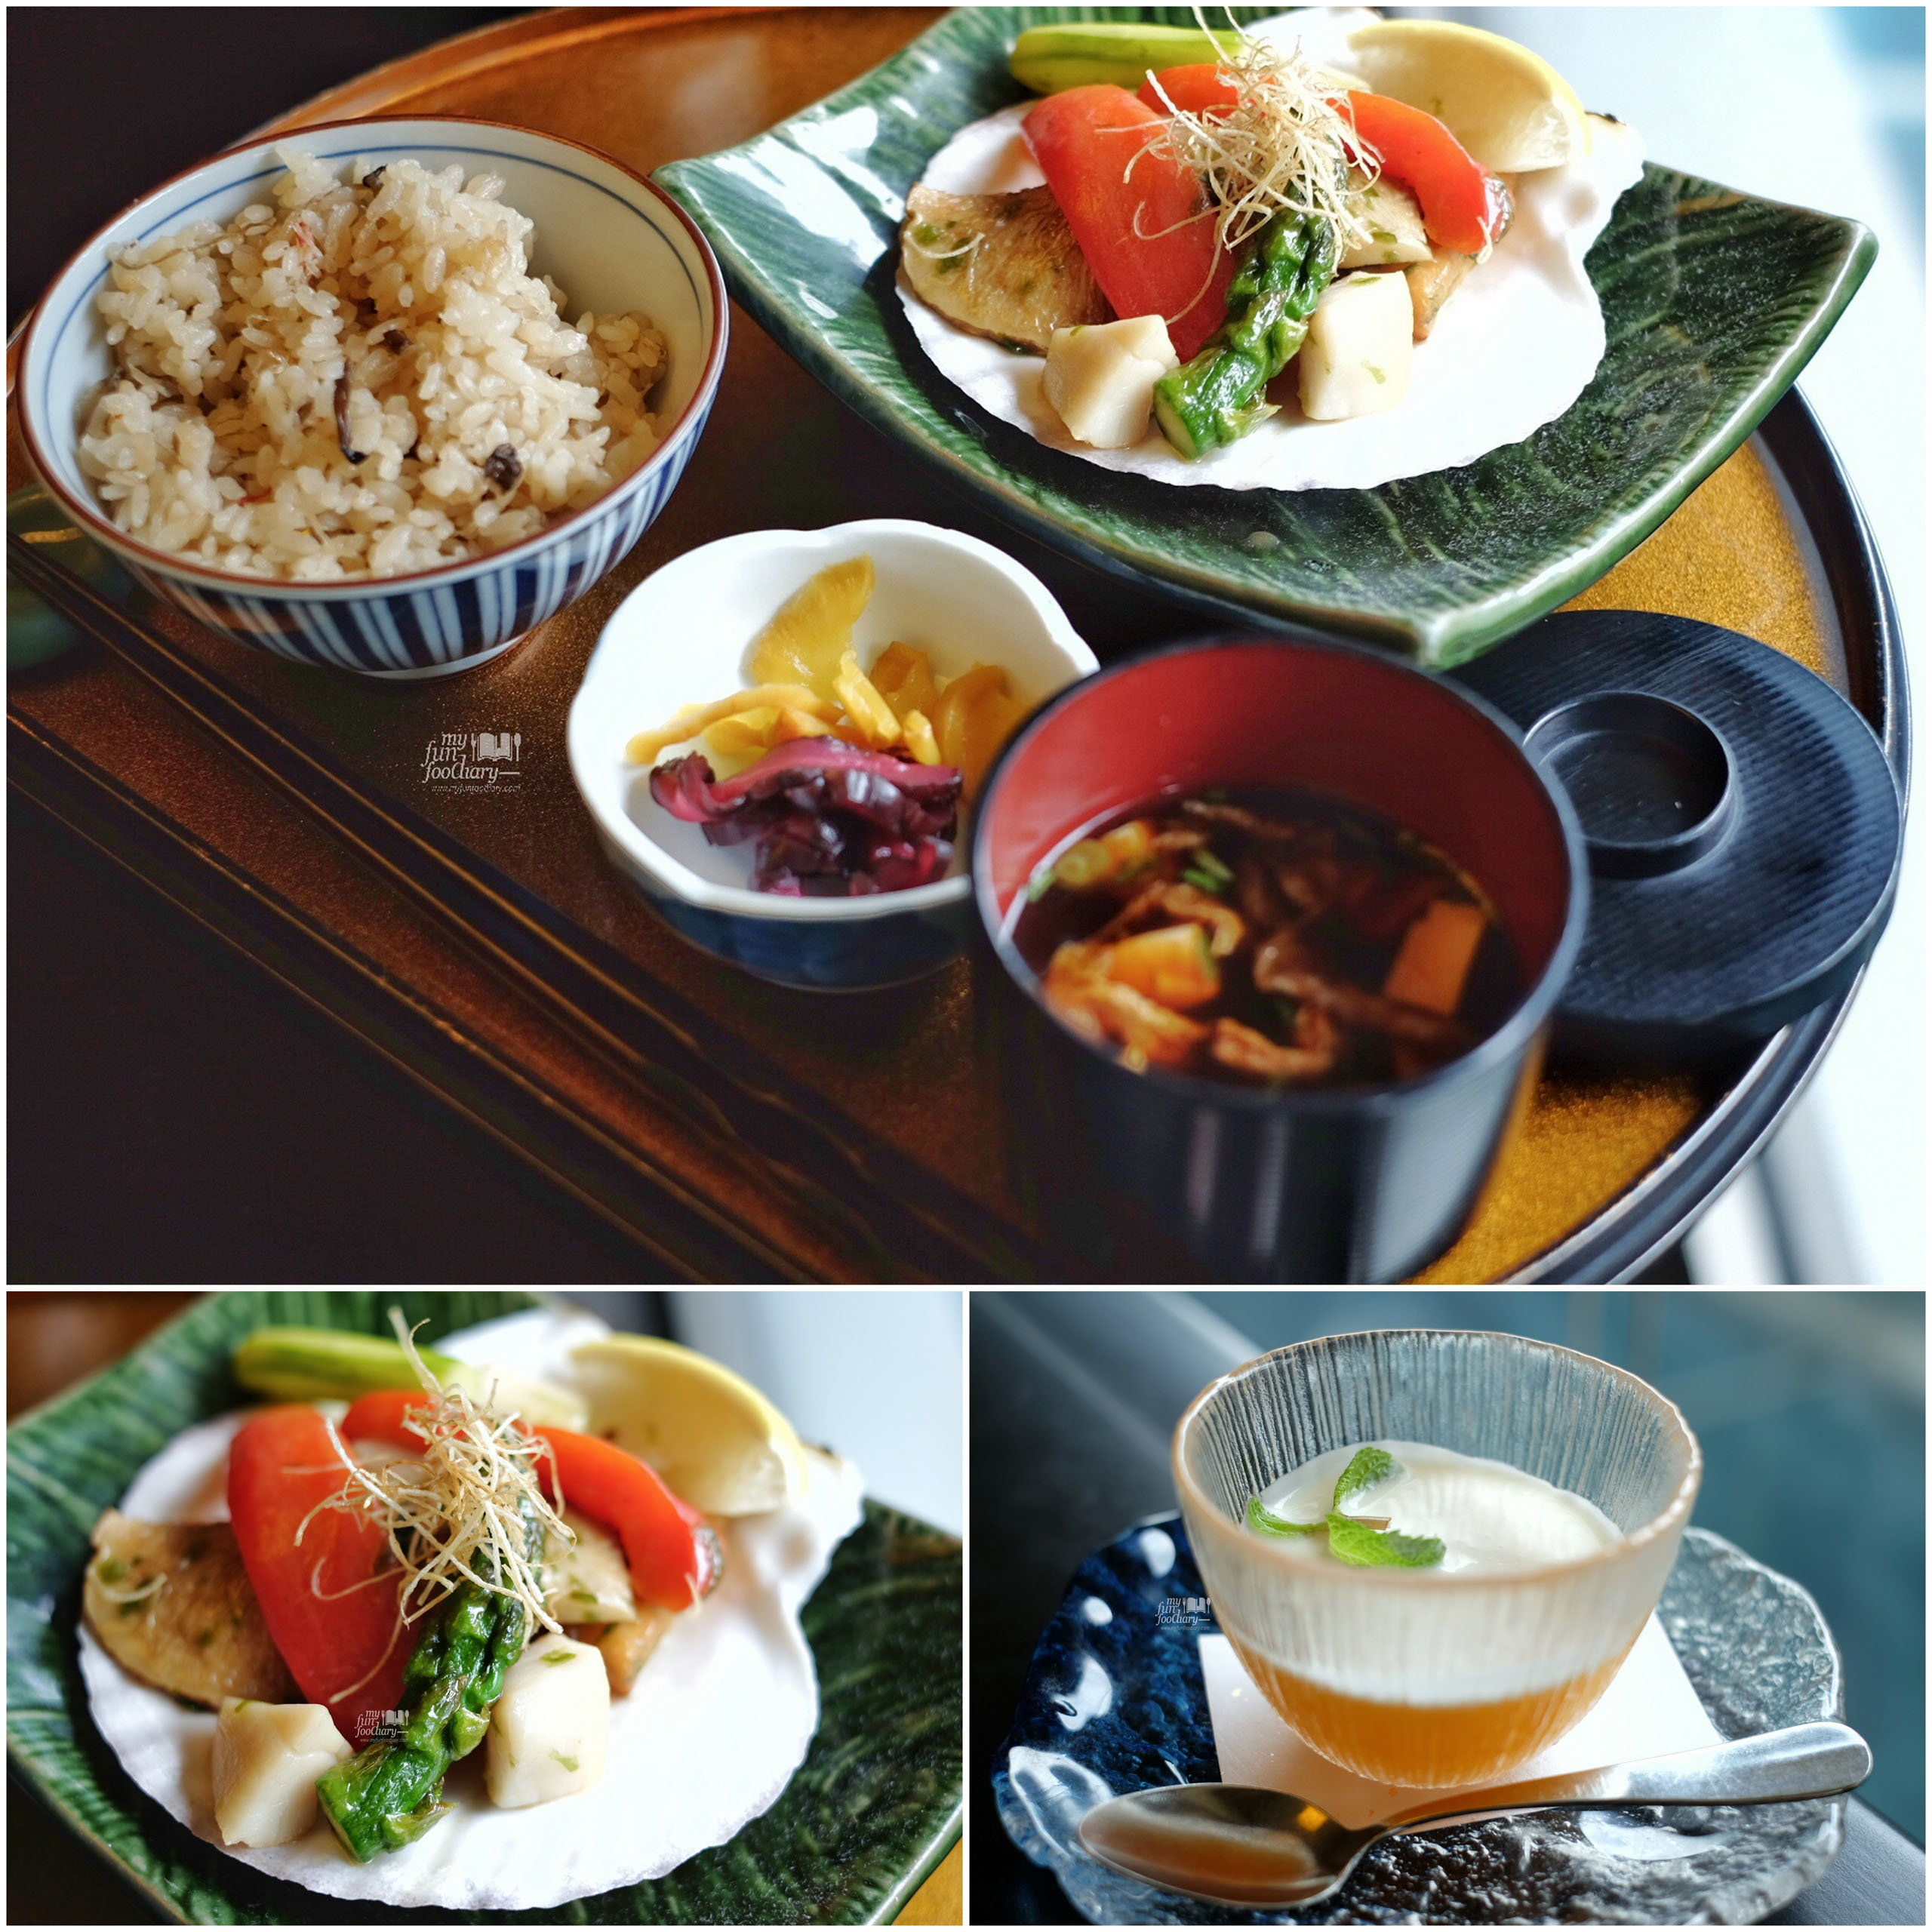 Kaiseki Lunch at Nadaman Restaurant Shangri-La Singapore by Myfunfoodiary